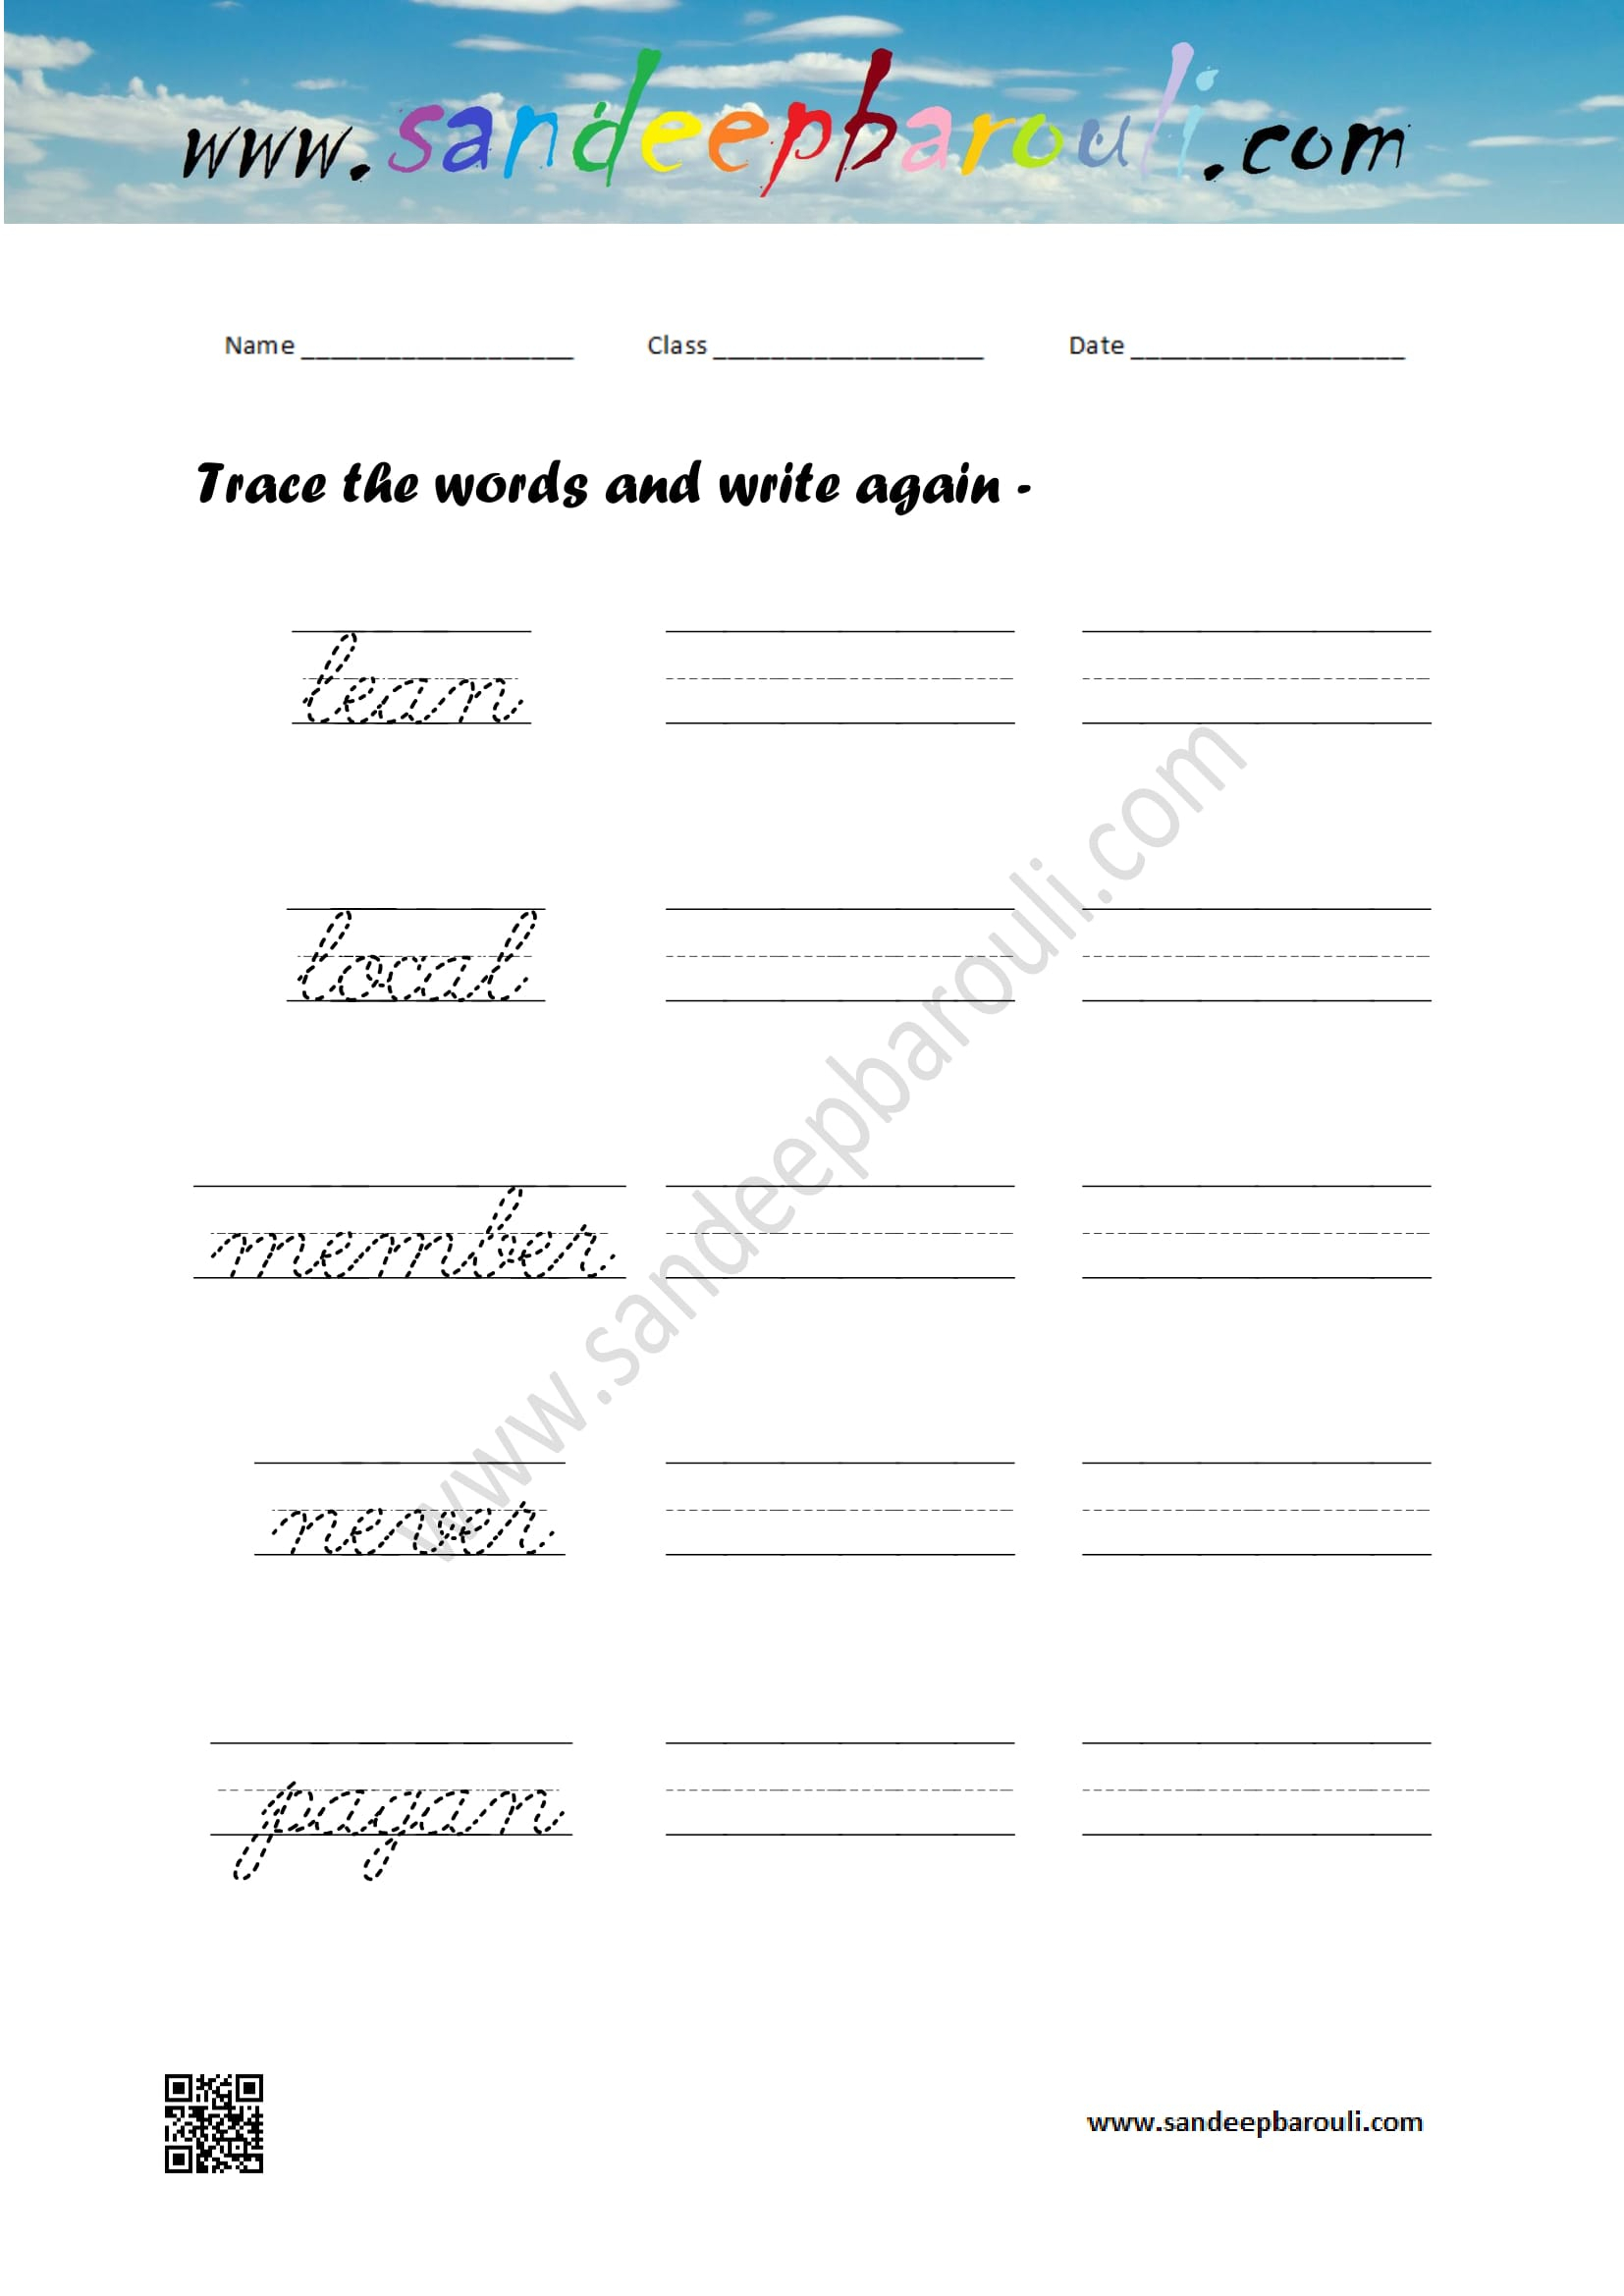 Trace Cursive Writing Worksheets | Printable Worksheets And within Name Tracing Worksheets Cursive